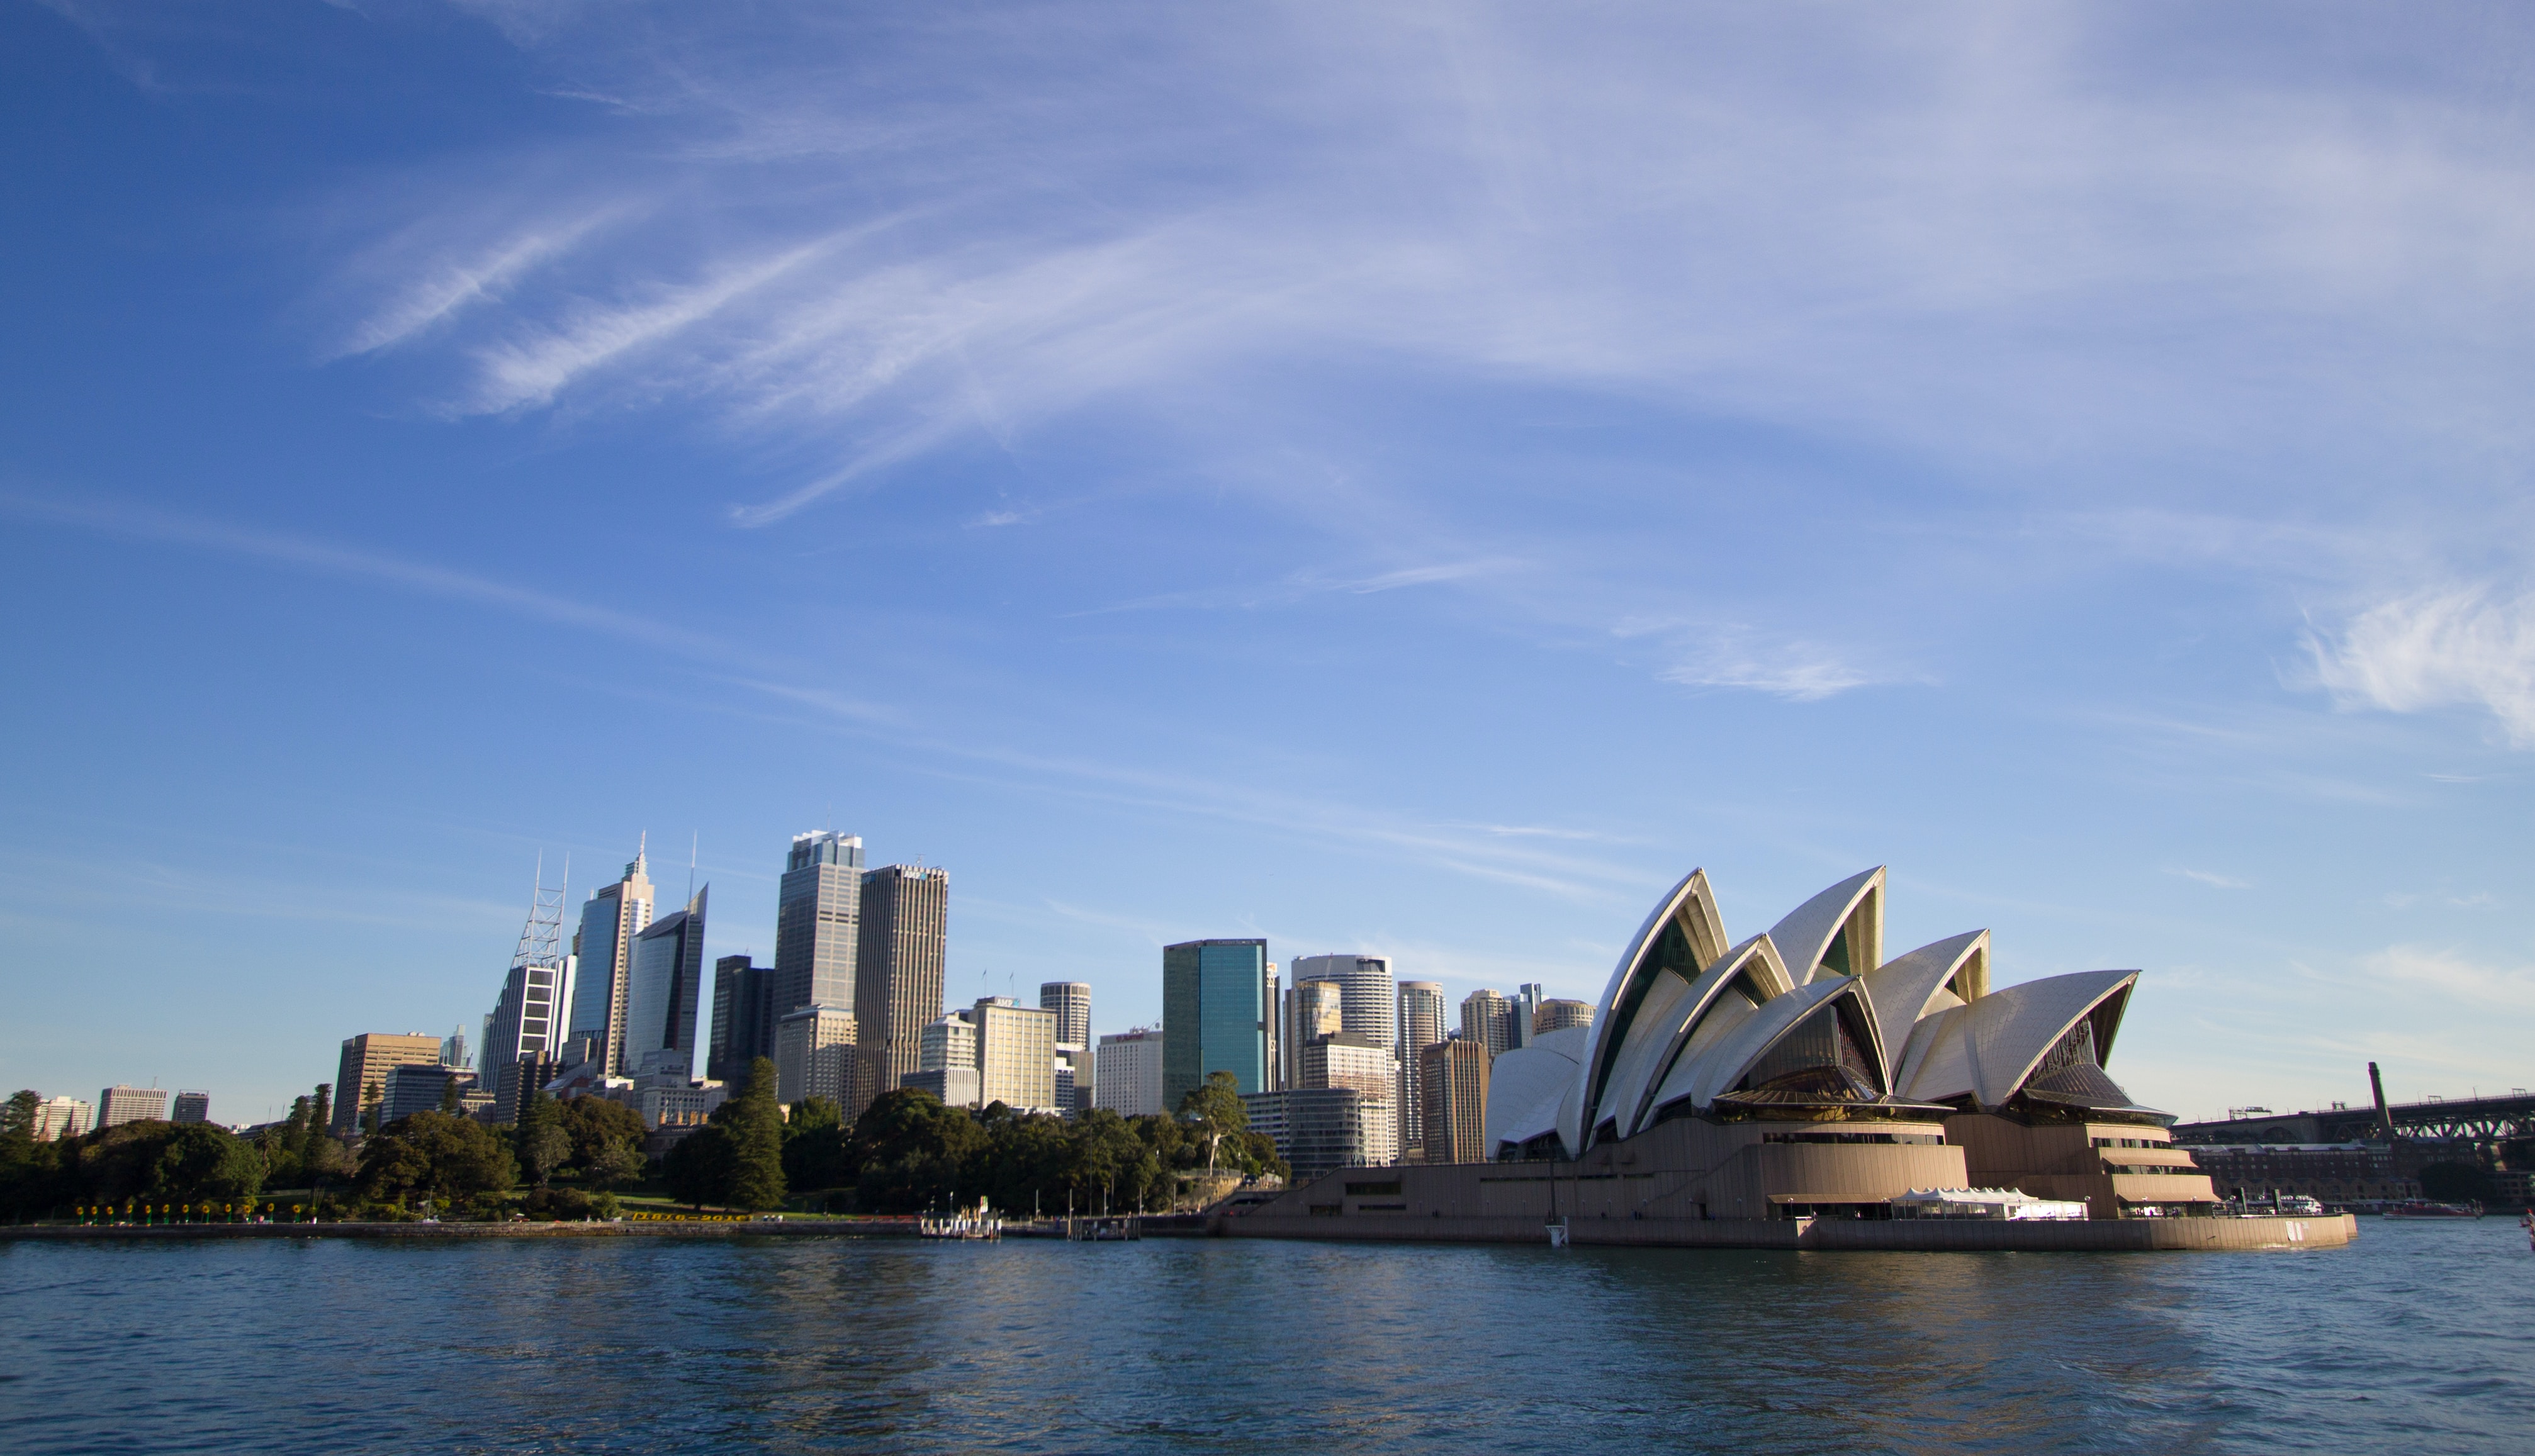 Sydney CBD skyline featuring the opera house